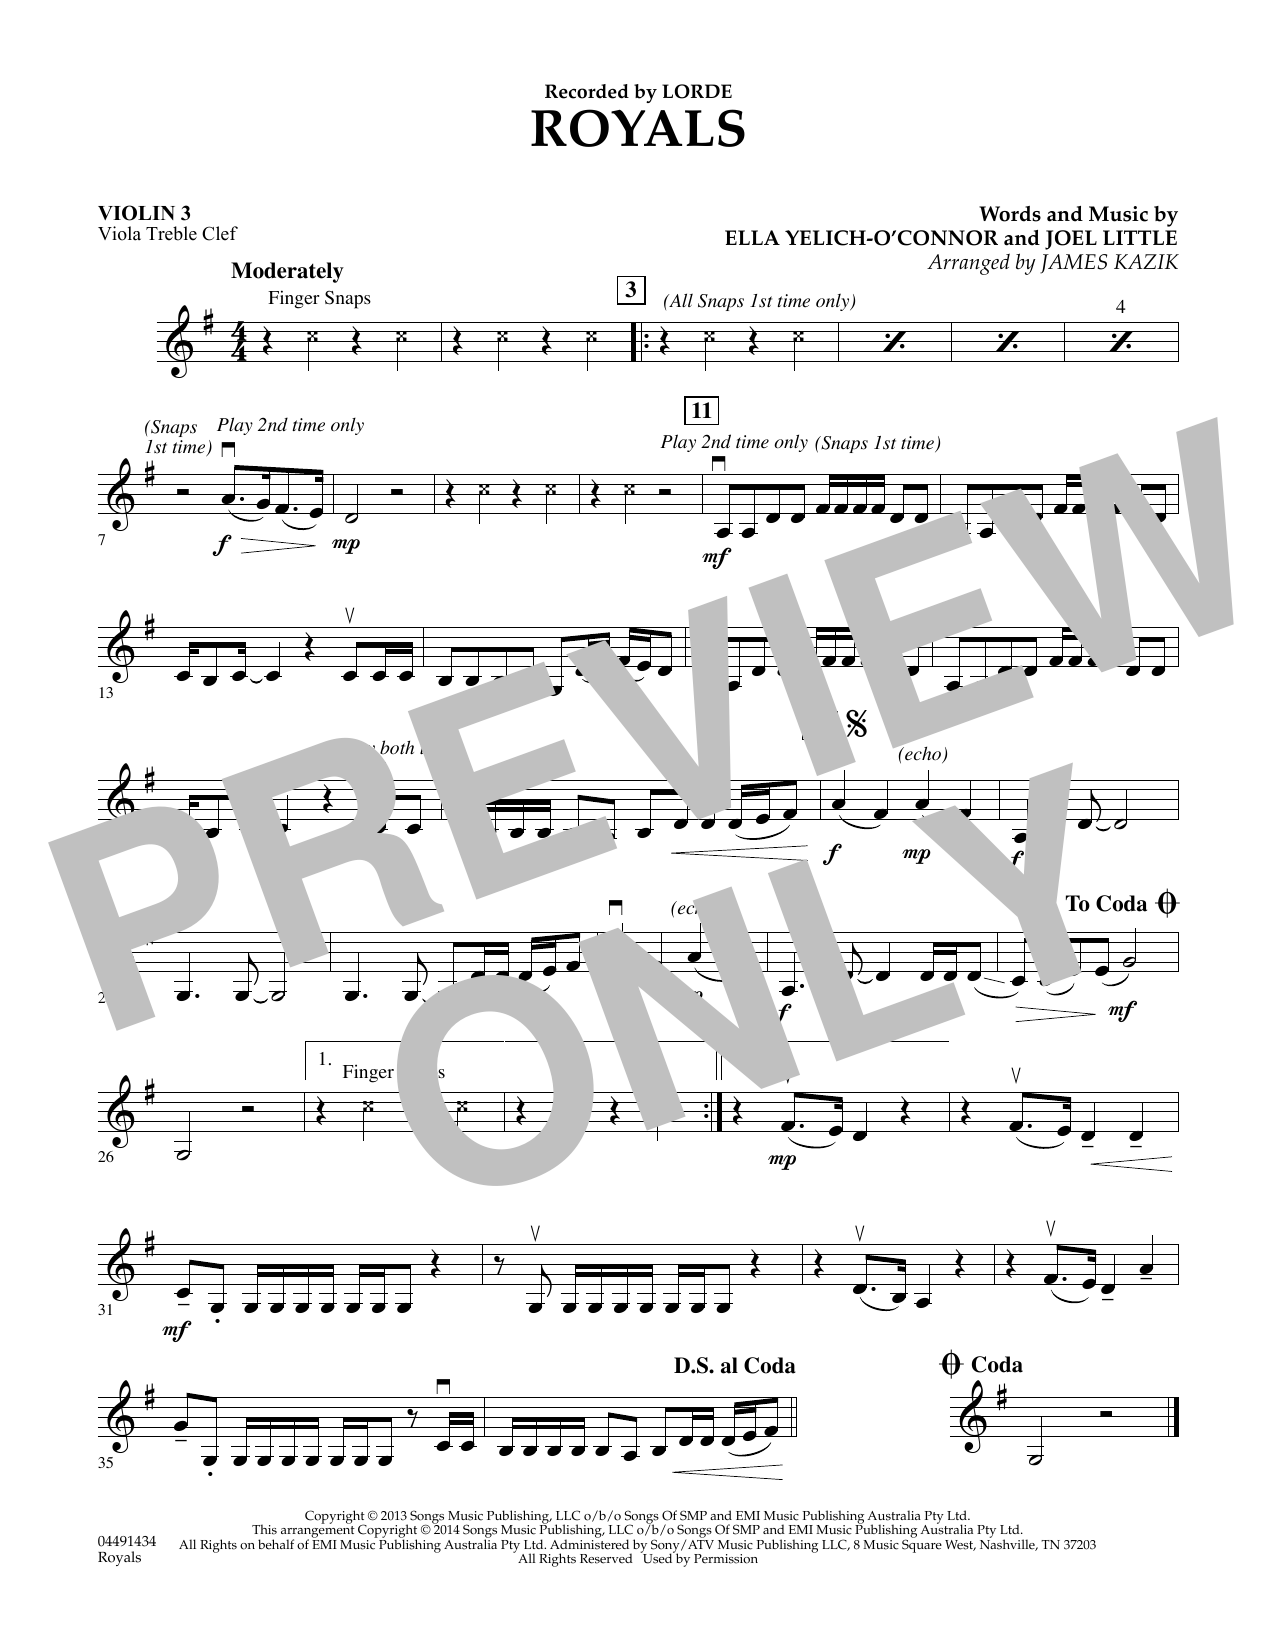 James Kazik Royals - Violin 3 (Viola Treble Clef) Sheet Music Notes & Chords for Orchestra - Download or Print PDF